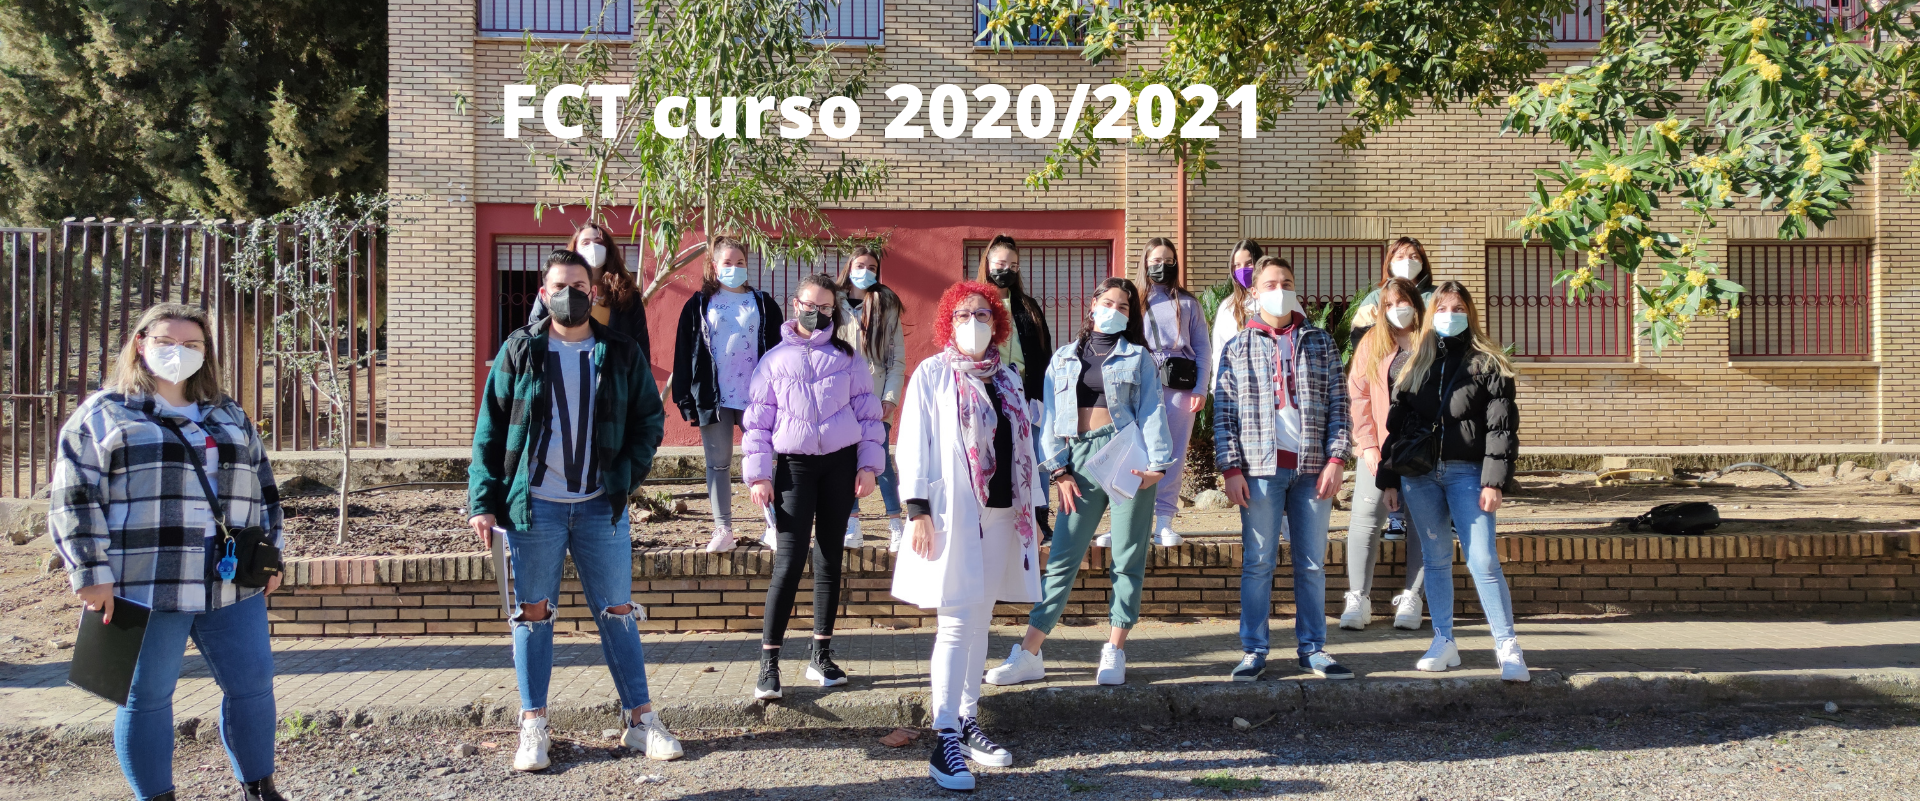 FCT curso 2020/2021